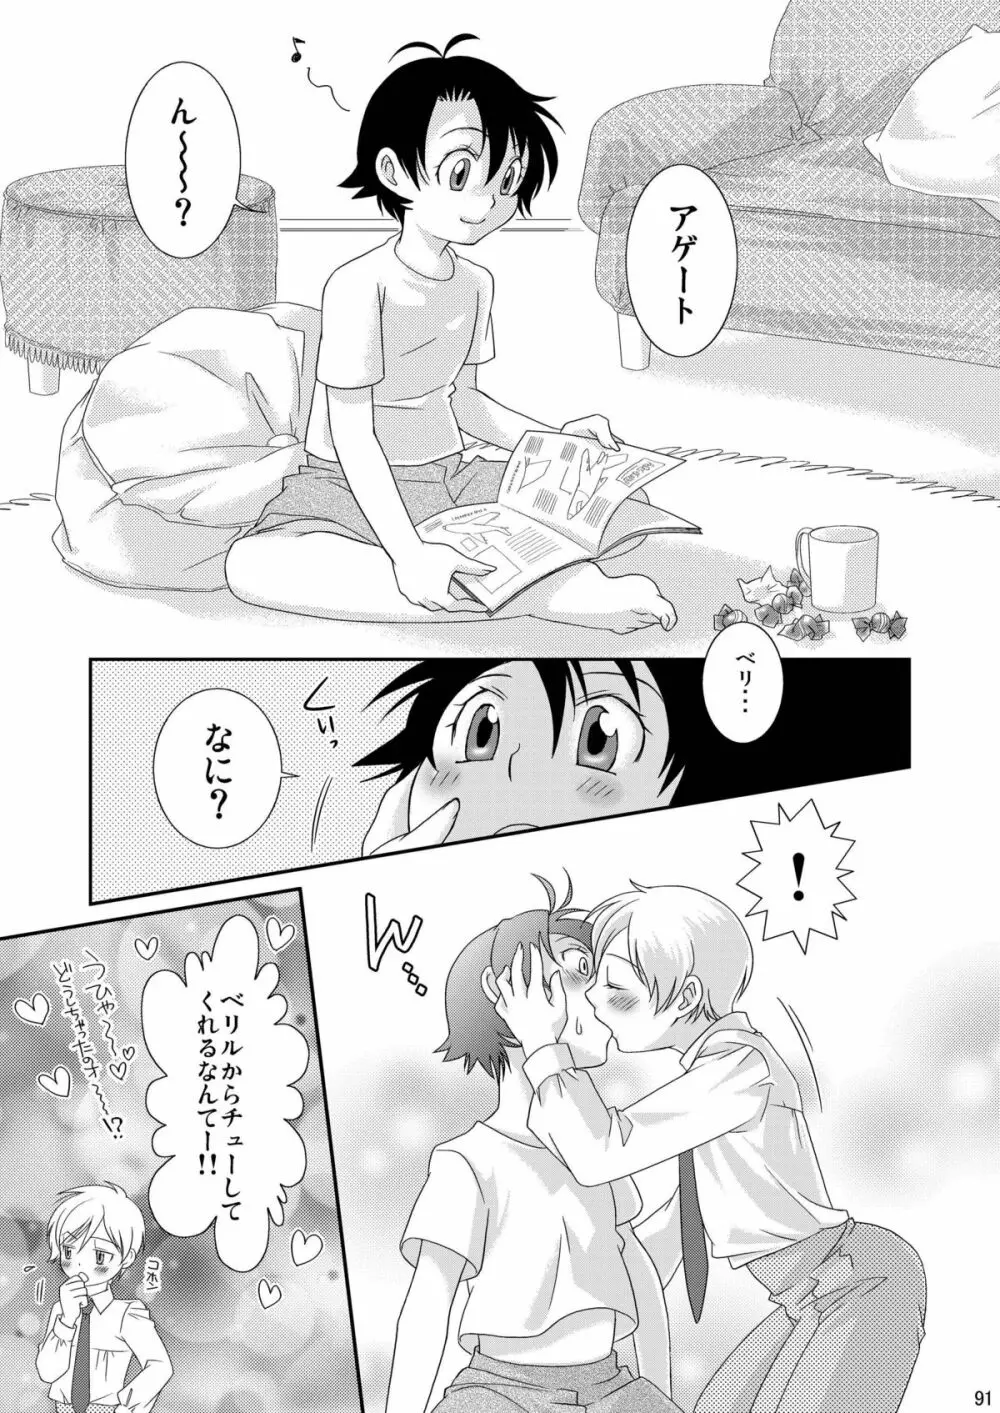 Re: ぷれい2 - page91